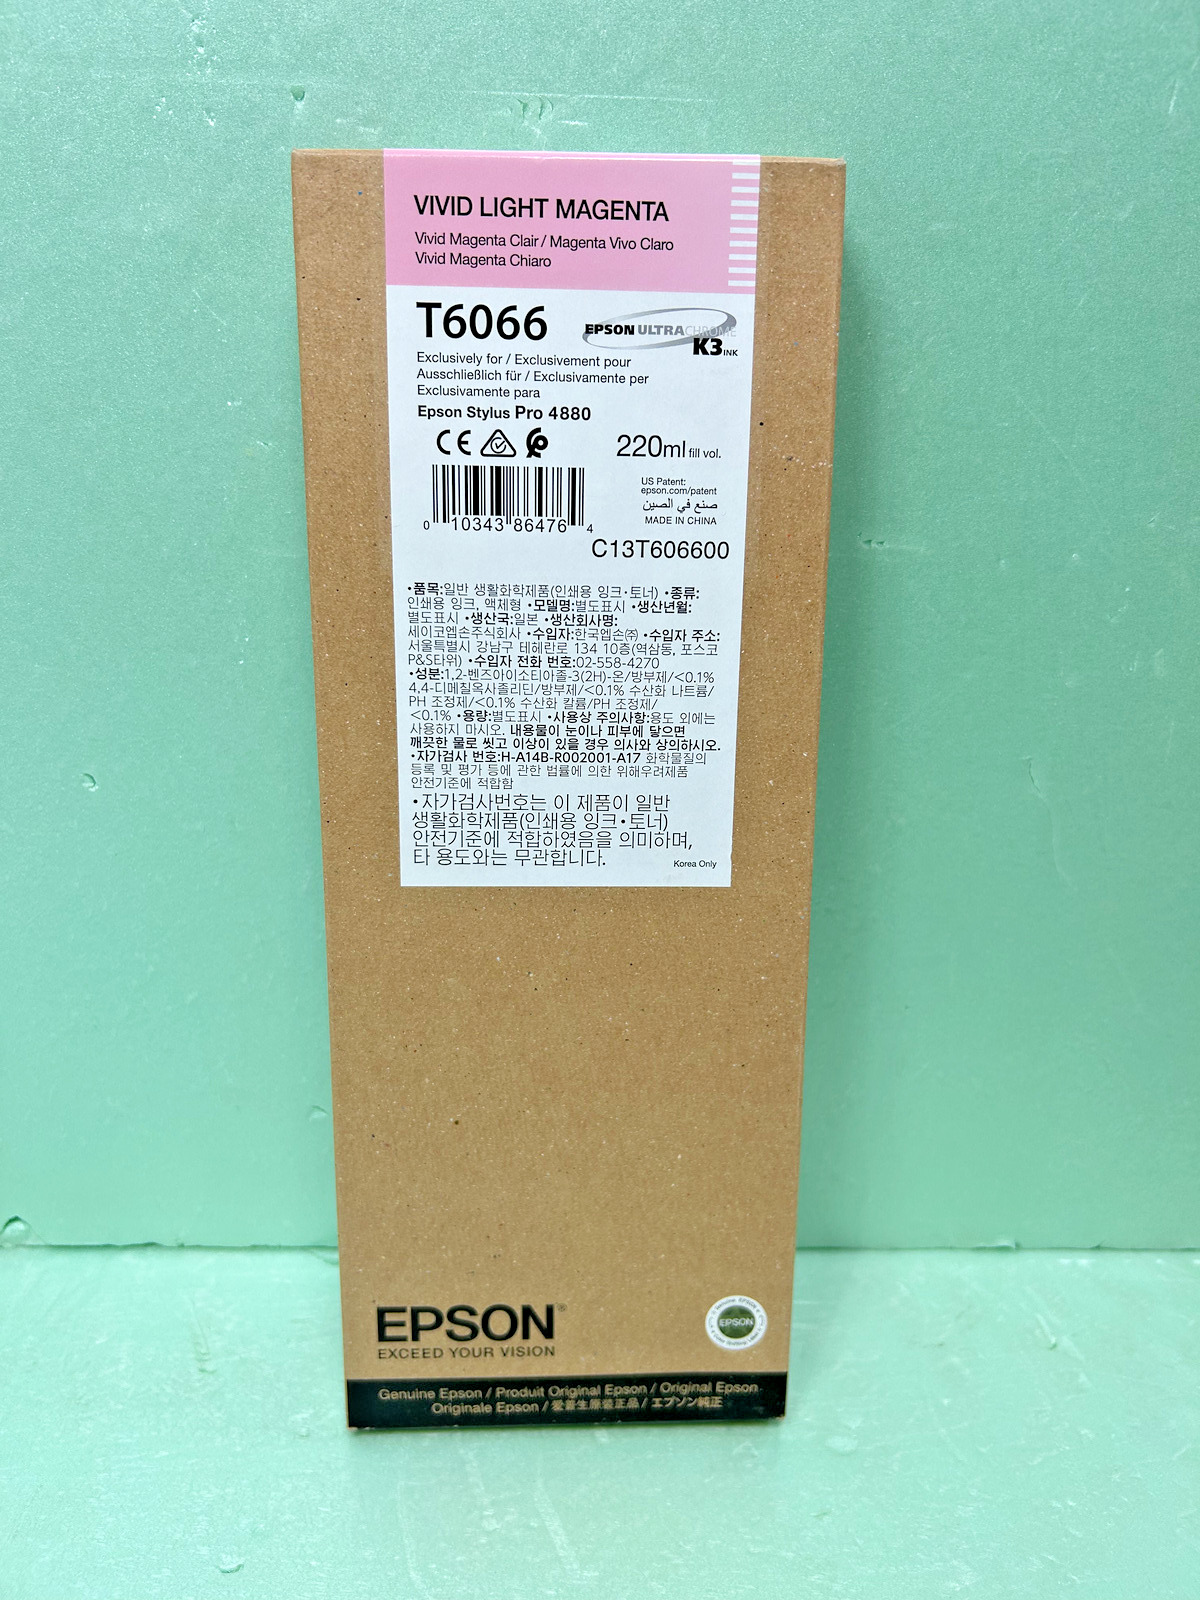 Expired June 2020 Genuine Epson Vivid Light Magenta Ink Cartridge T6066